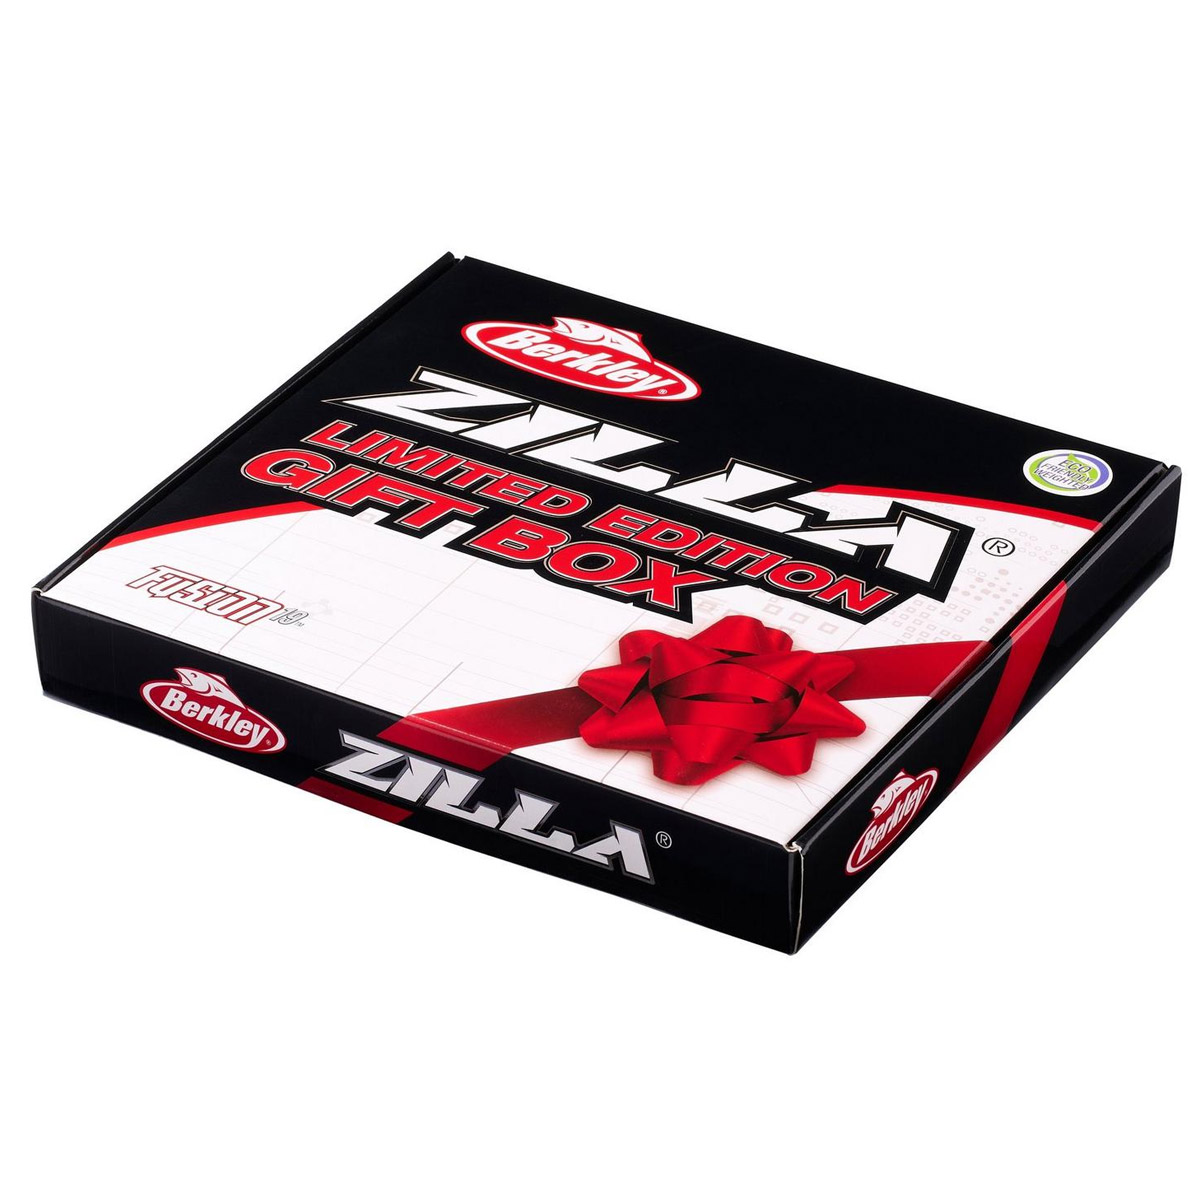 Berkley Zilla Limited Edition Gift Box